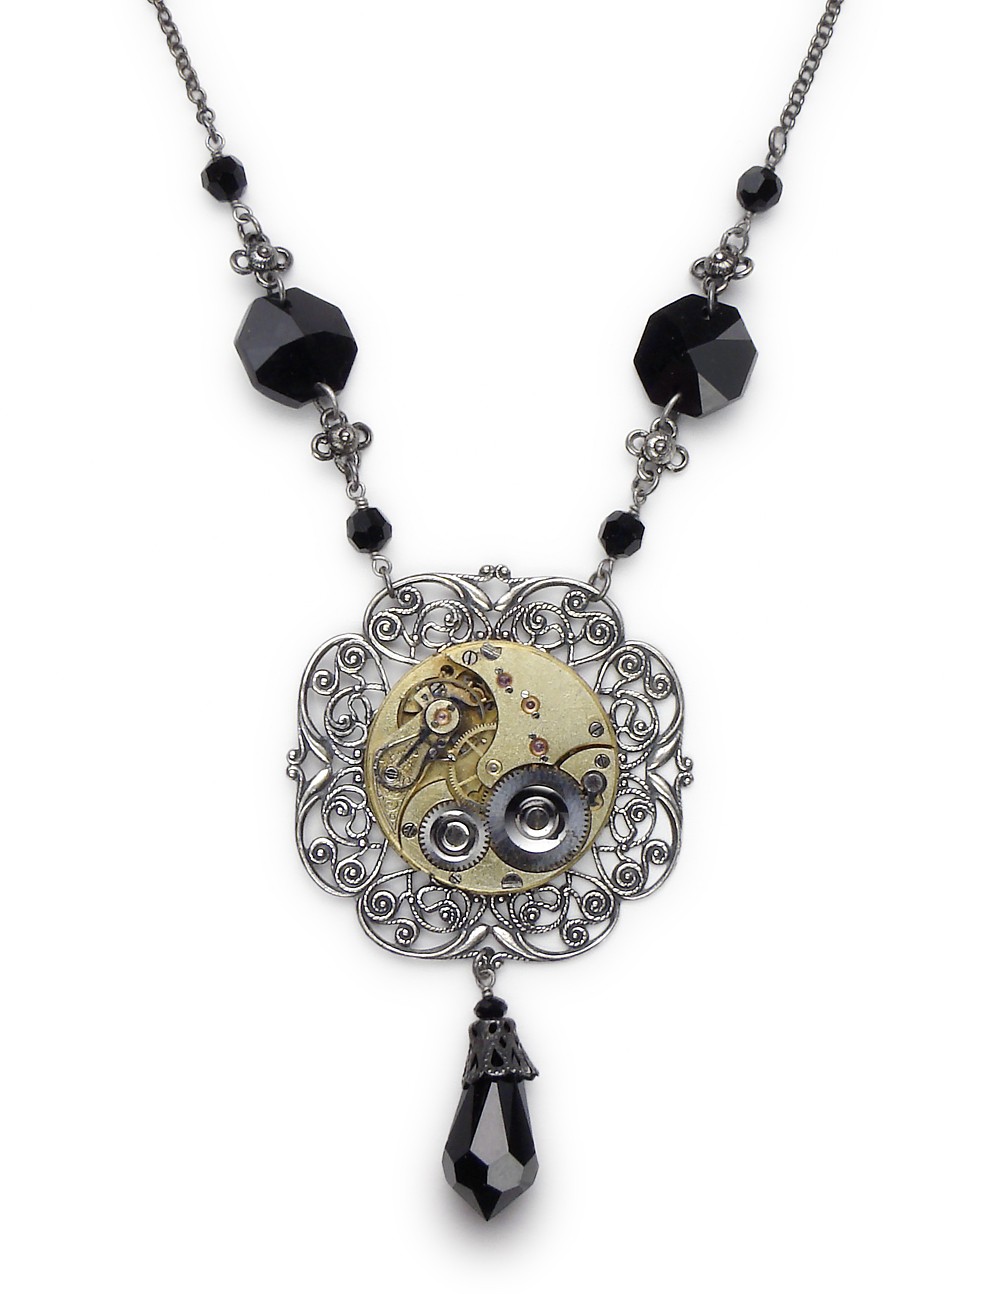 Steampunk Necklace gold guilloche pocket watch gears silver filigree antique 1900 faceted black Swarovski crystal beads briolette chandelier vintage pendant